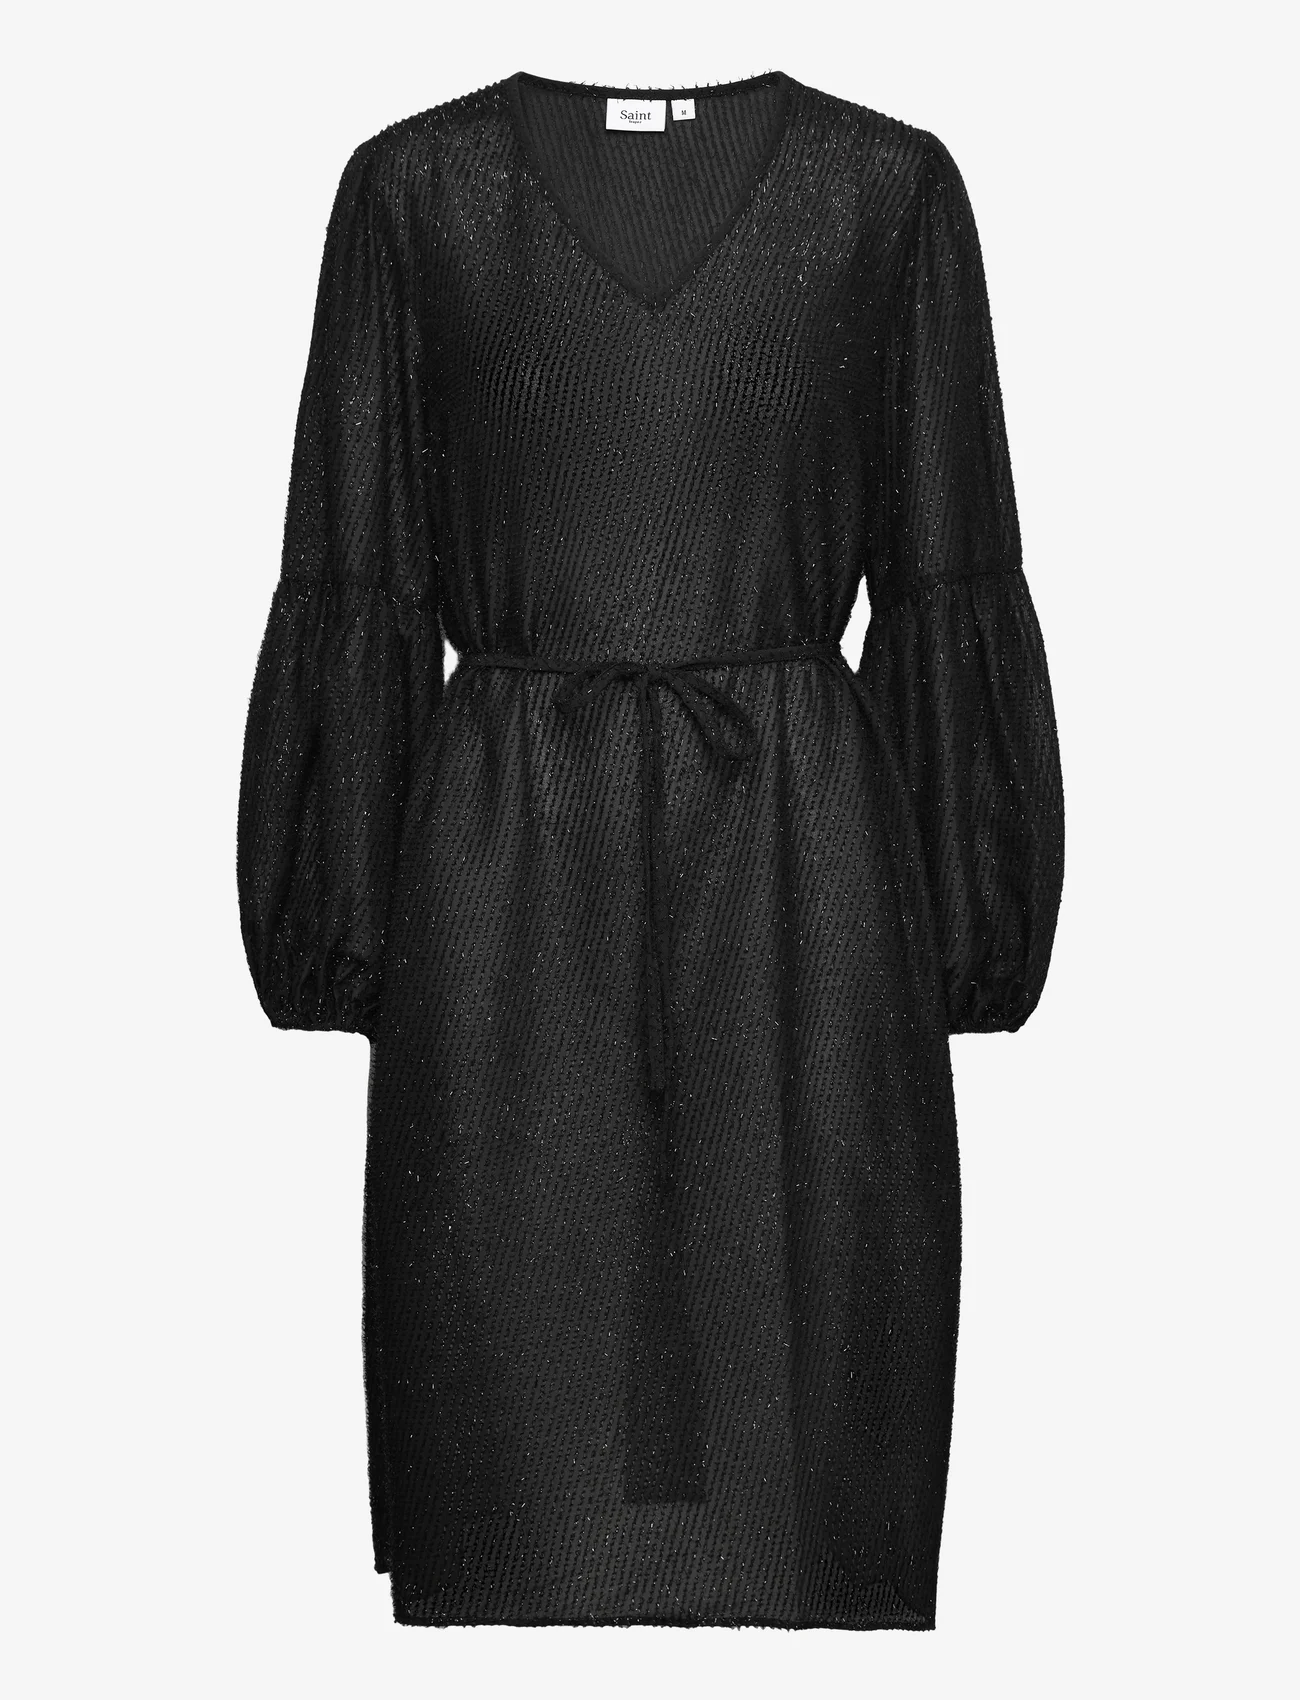 Saint Tropez - BriSZ Dress - festtøj til outletpriser - black - 0